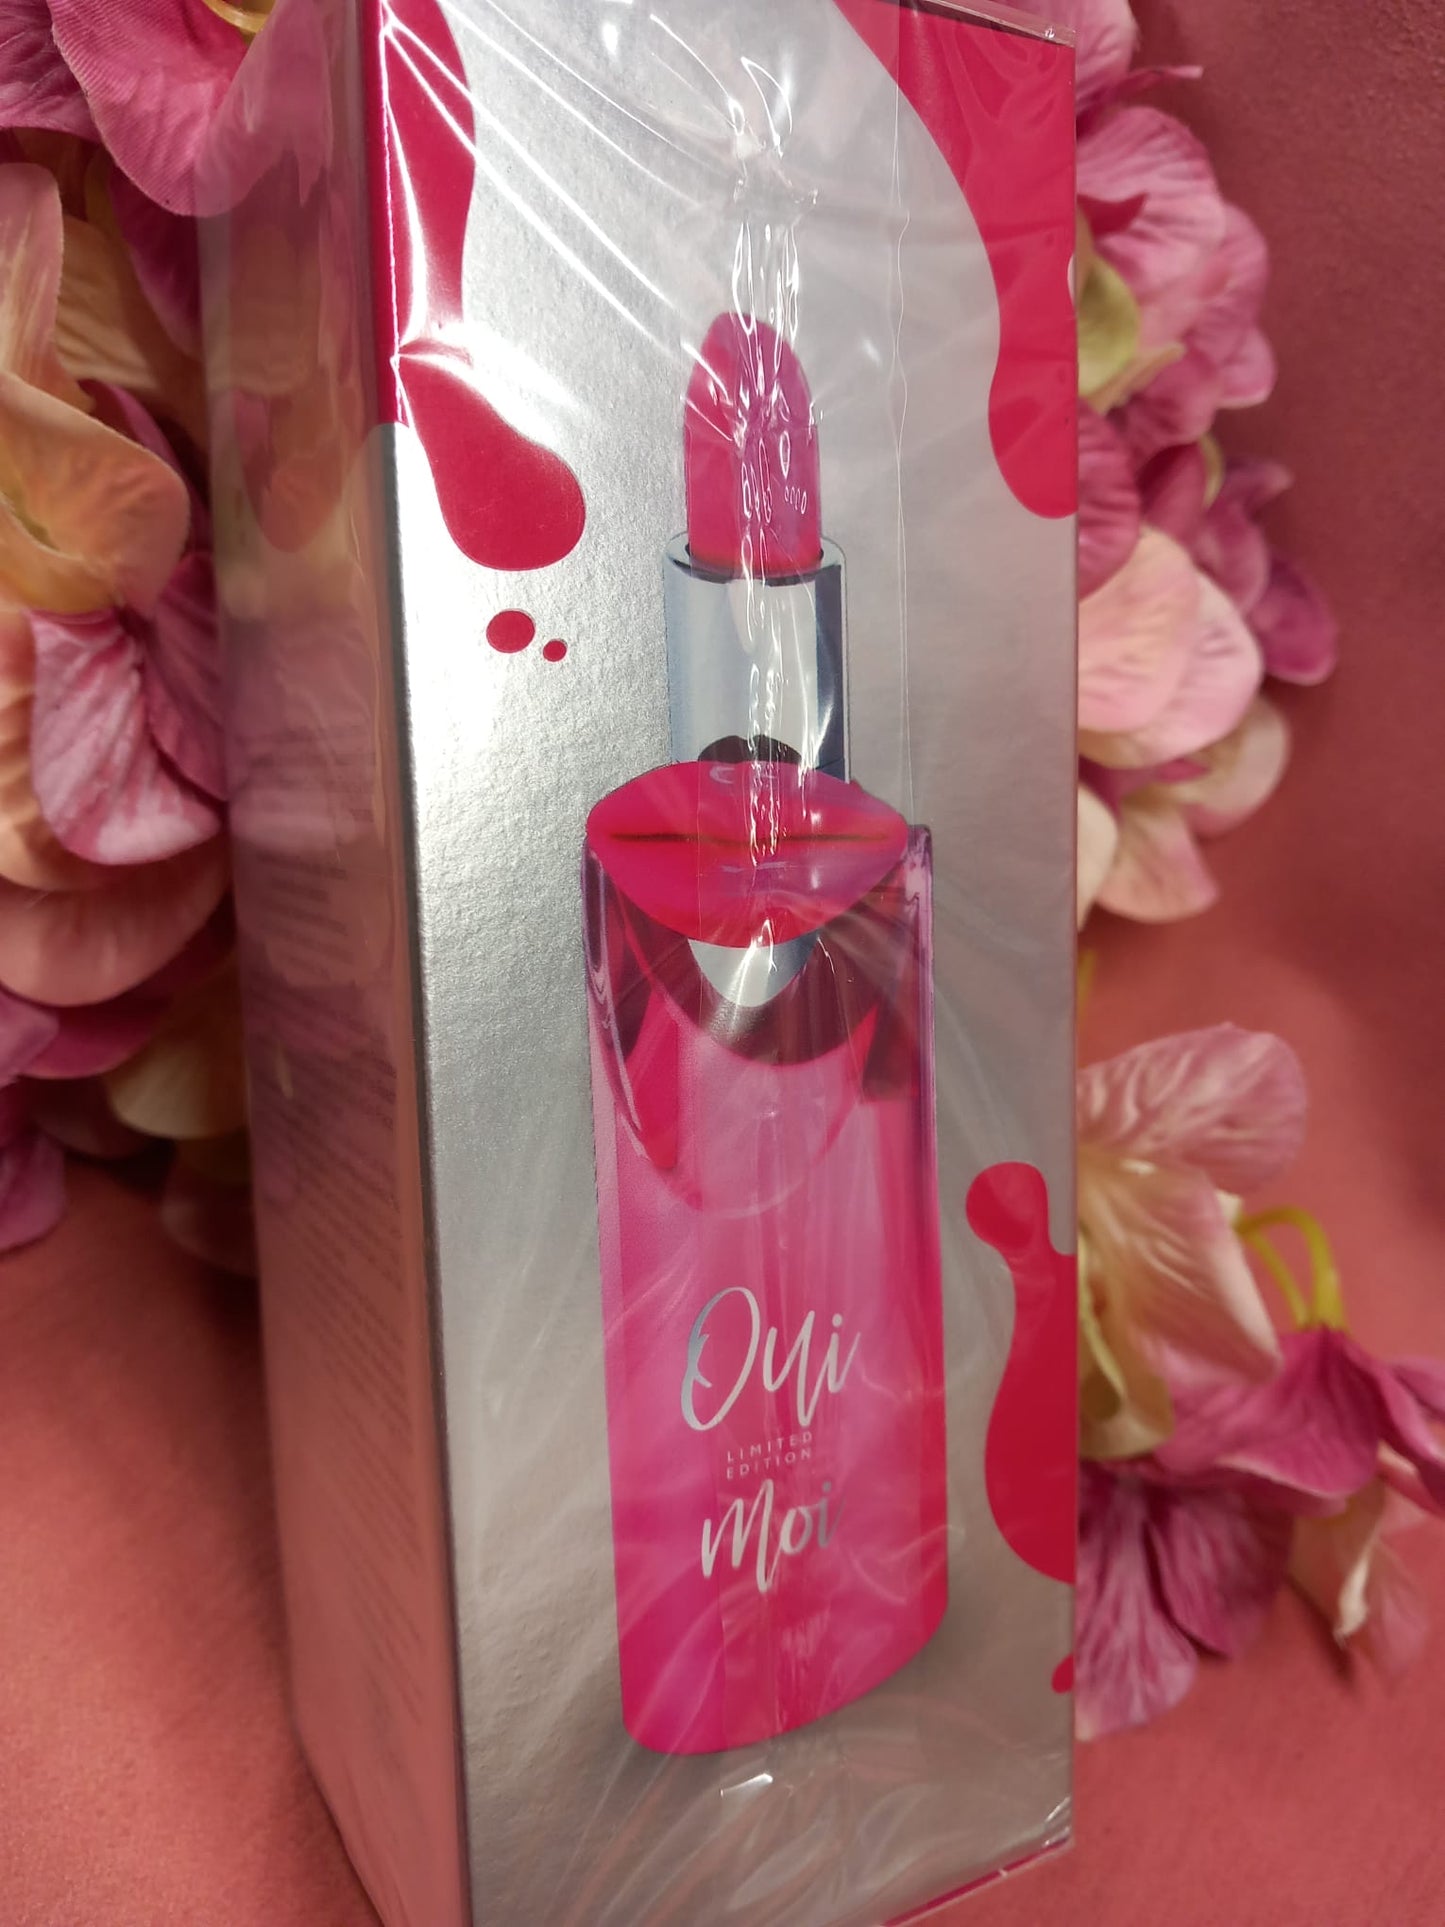 PERFUME Oui Moi Limited Edition -
 Eau De Parfum Spray Perfume, Fragrance for Women- Daywear, Casual Daily